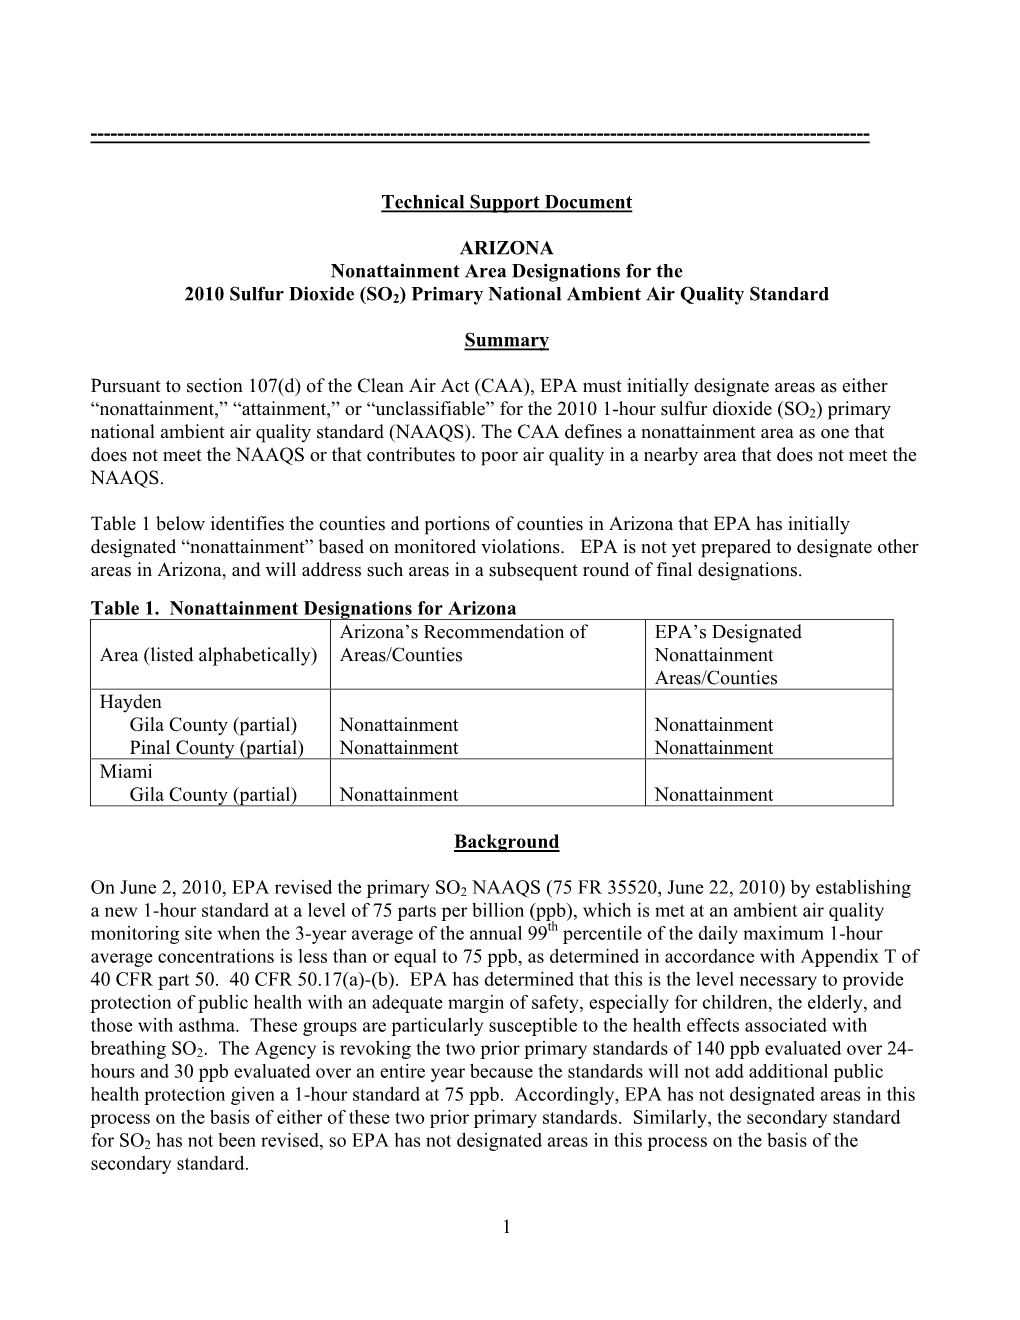 Arizona Technical Support Document (PDF)